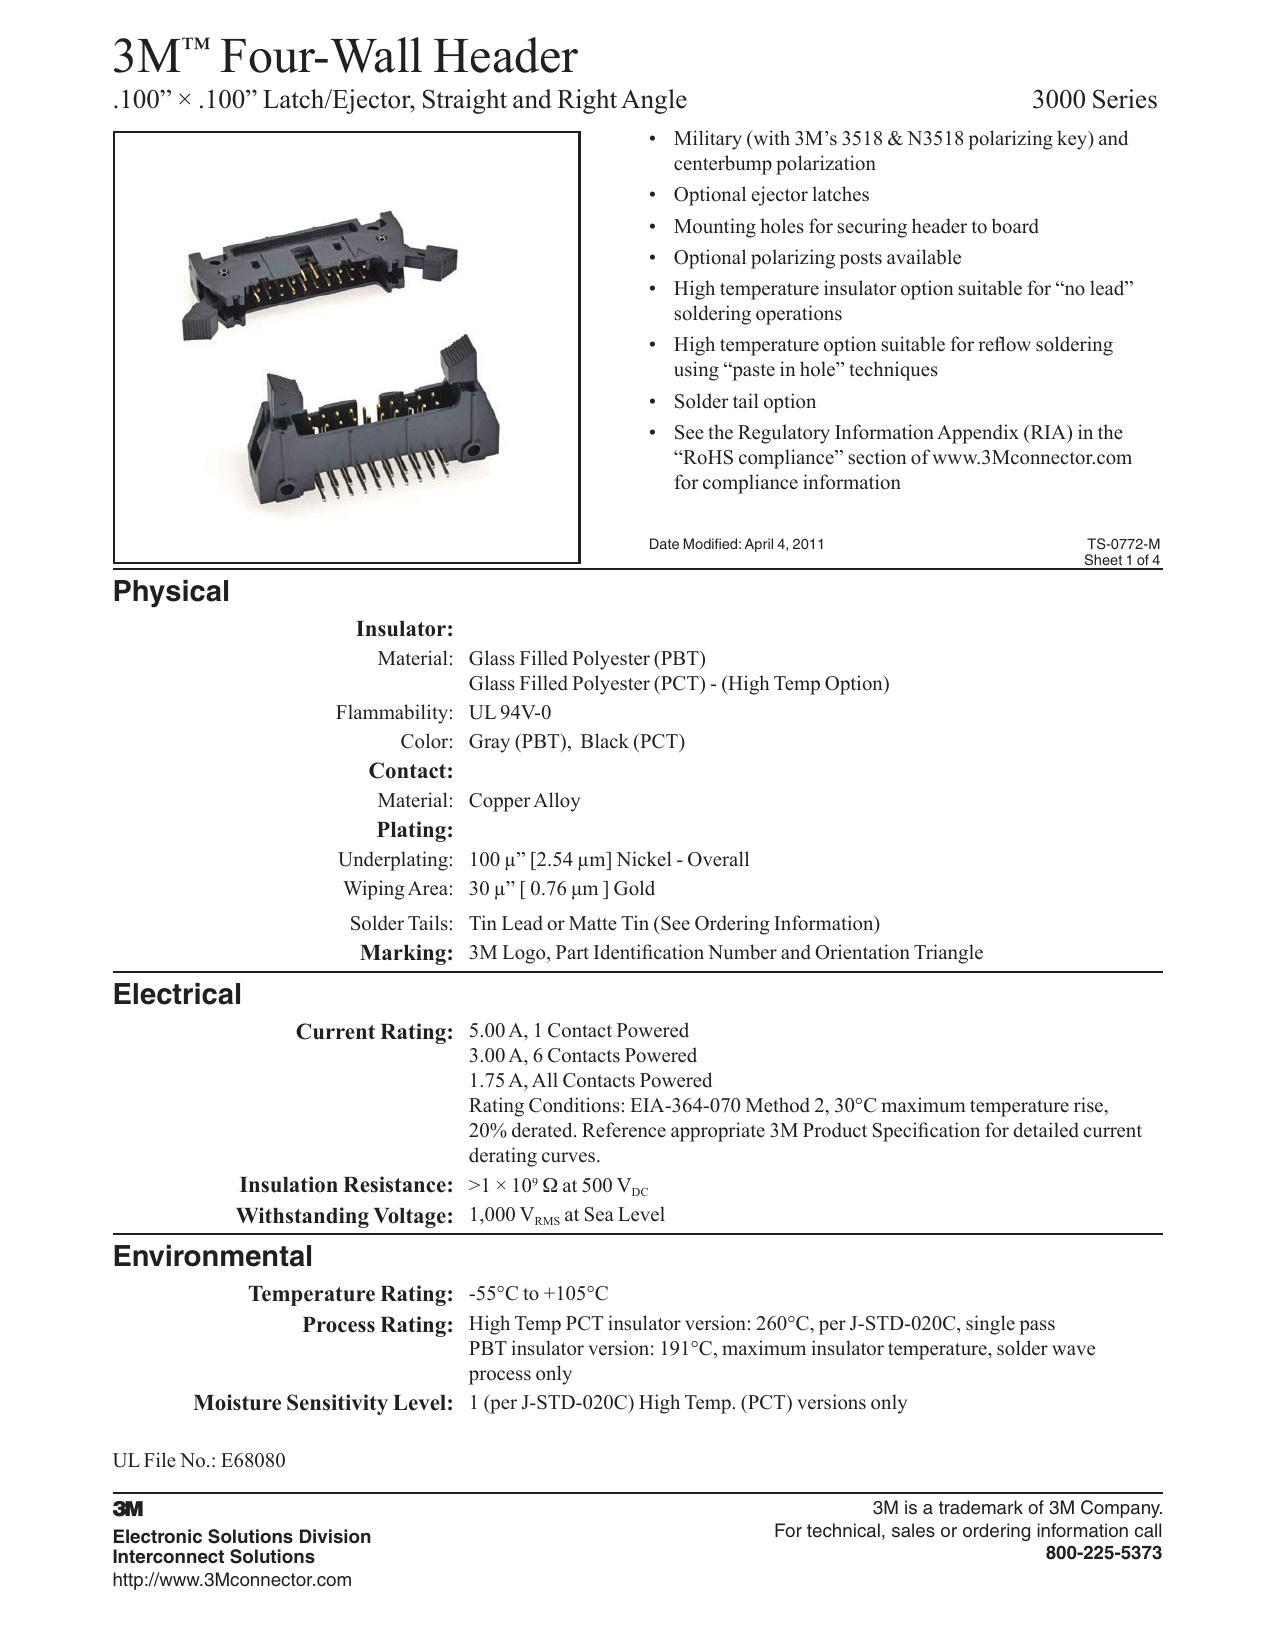 3m-four-wall-header-3000-series-military-datasheet.pdf